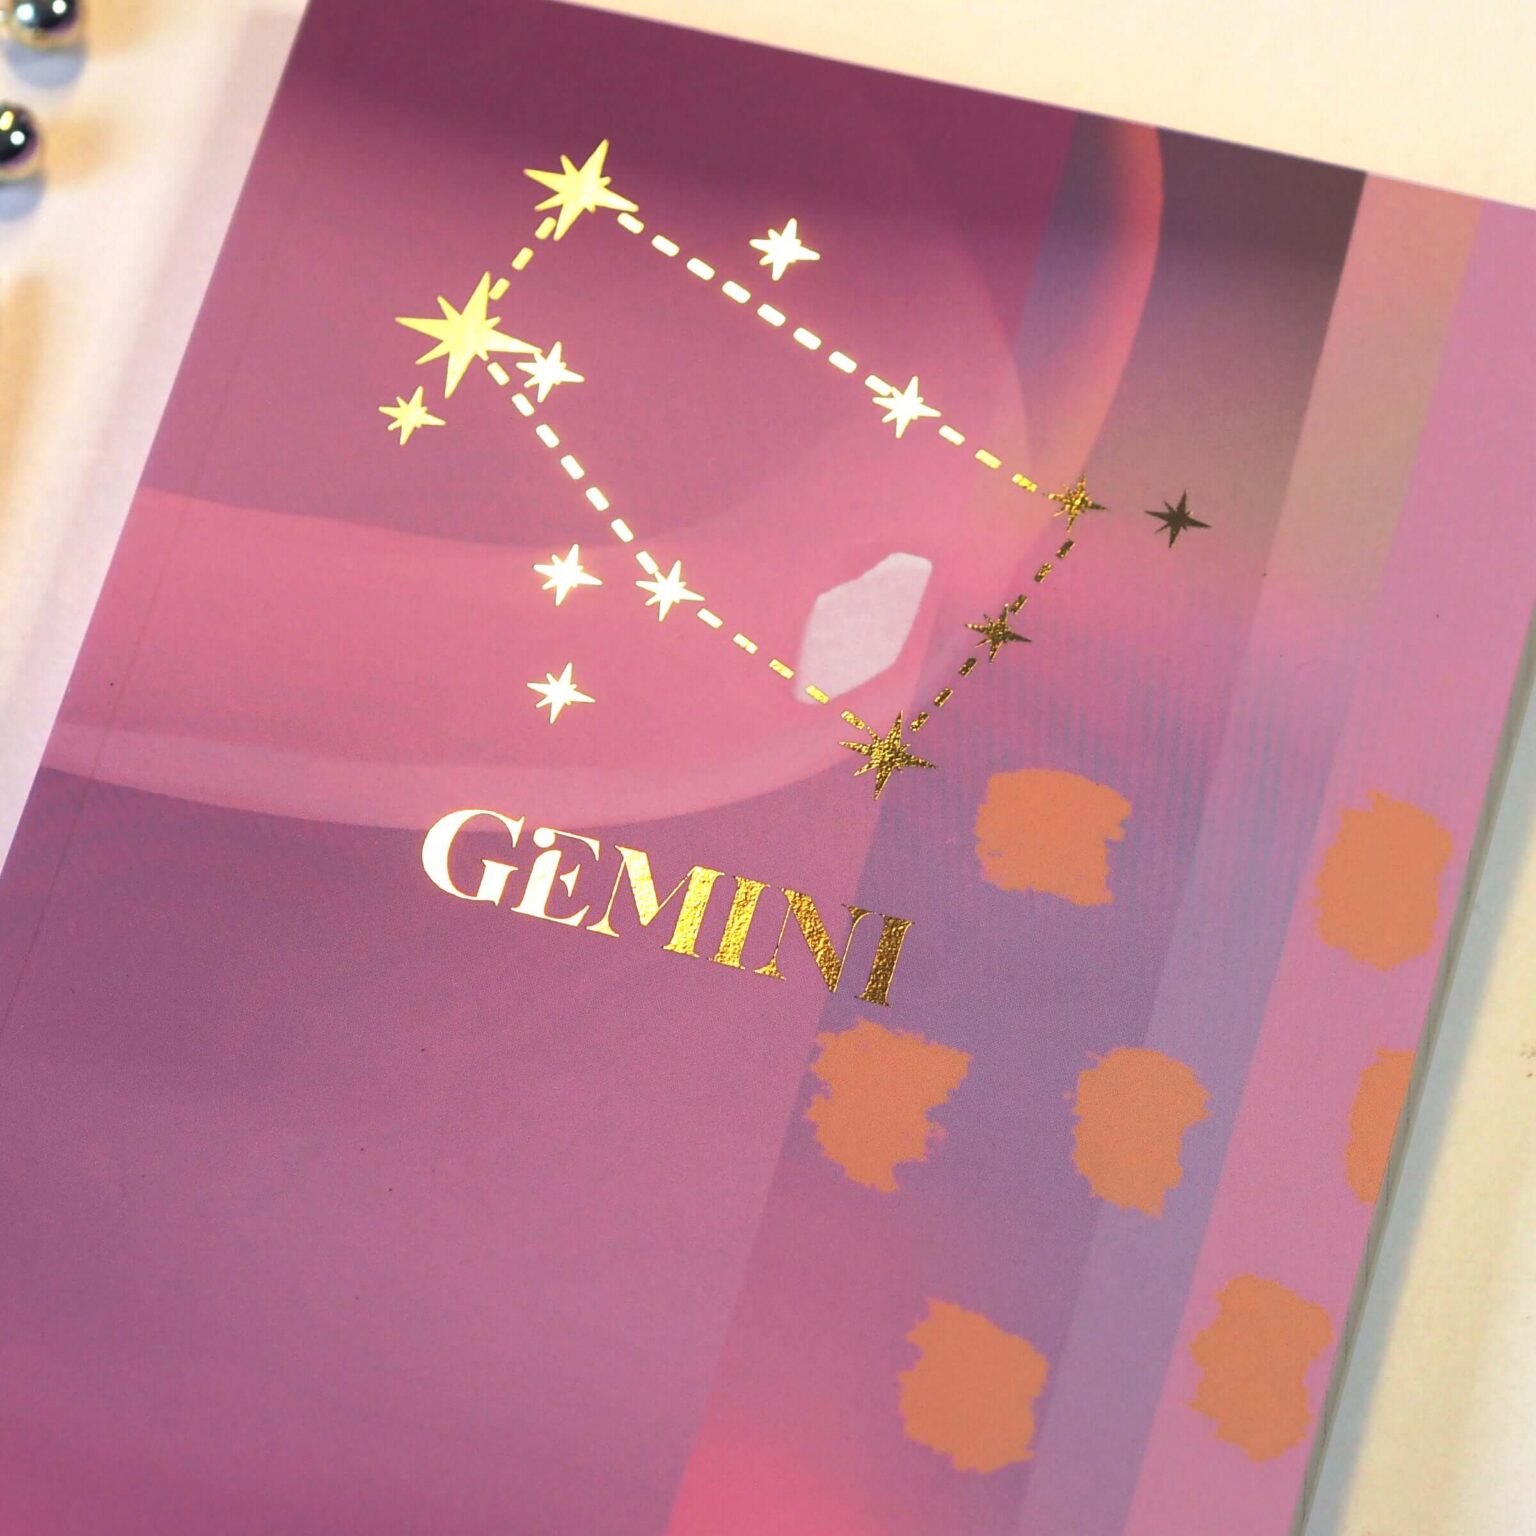 gemini star sign notebook gift, gold constellation detail